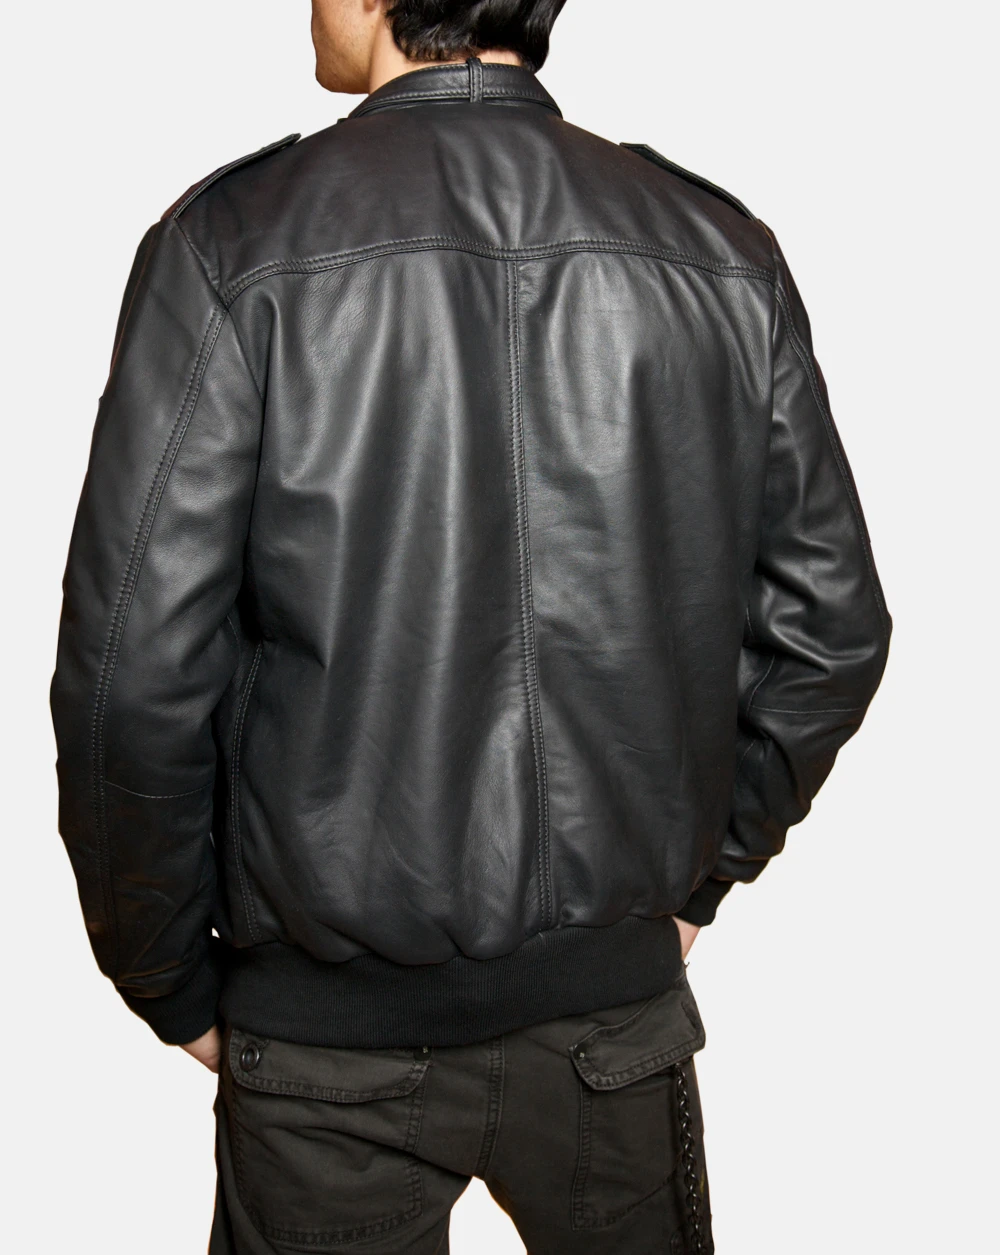 Full grain lambskin leather jacket